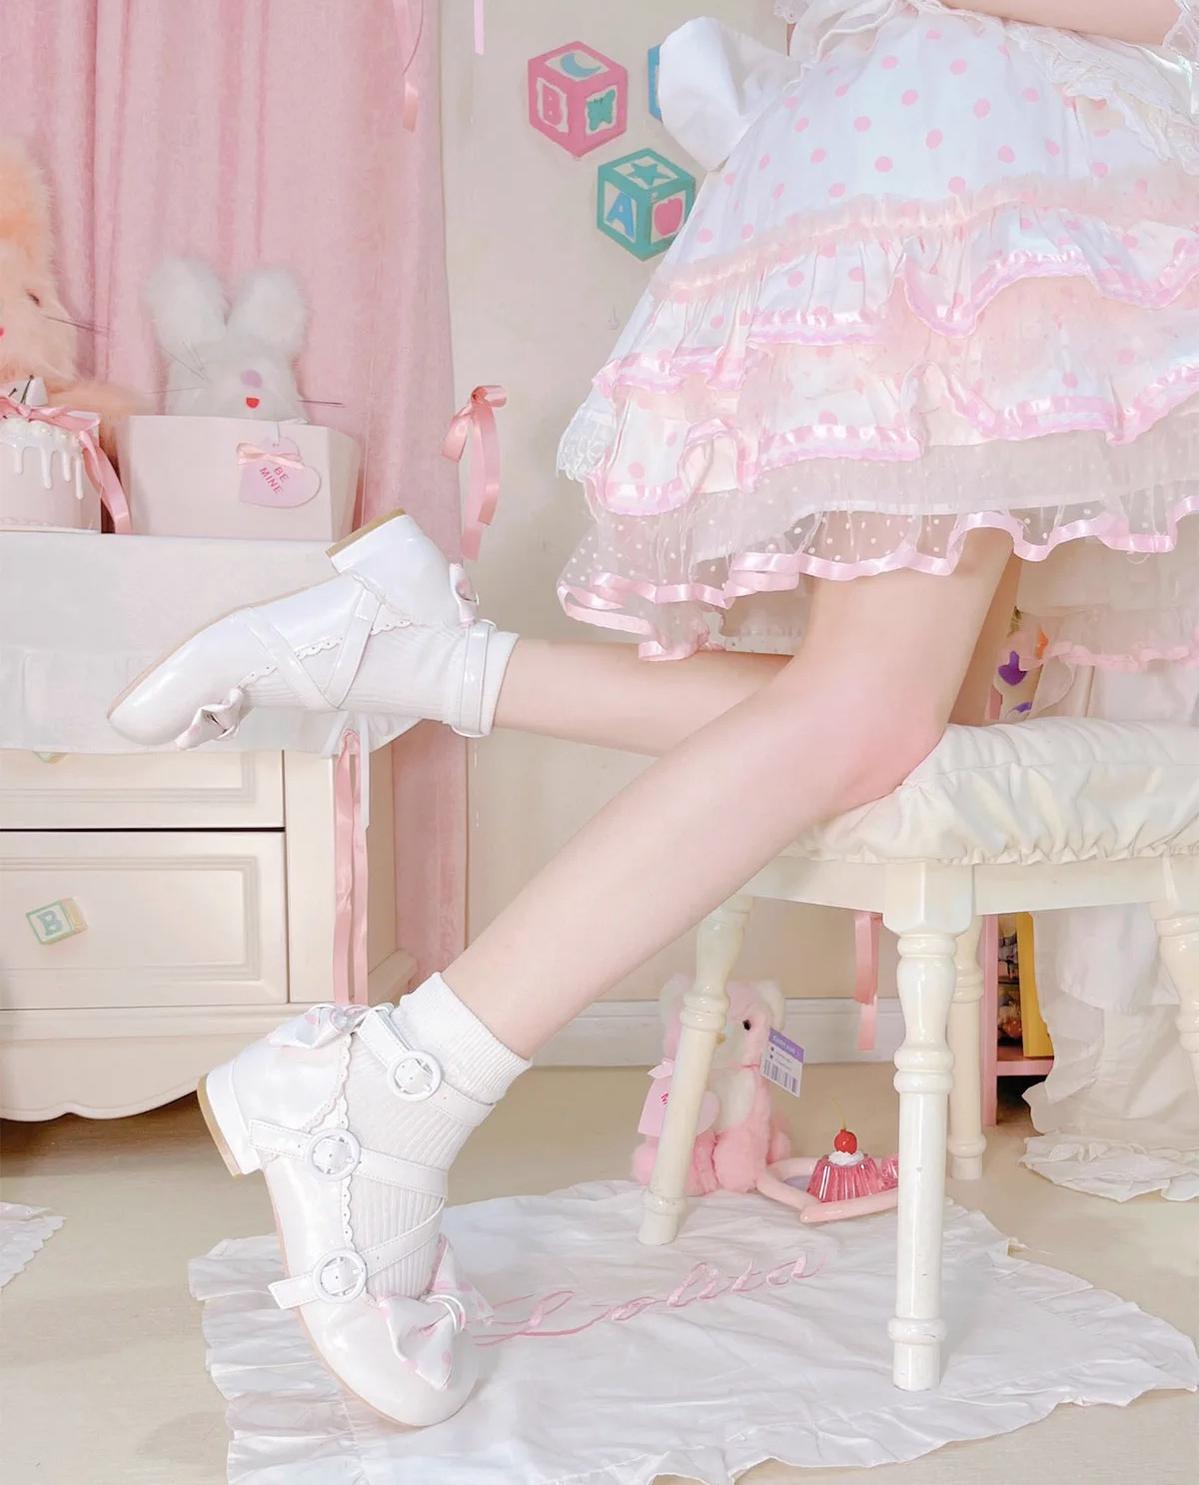 Sheep Puff~Swirly Pop~Sweet Lolita Shoes Polka Dot Lolita Mid Heels Shoes   